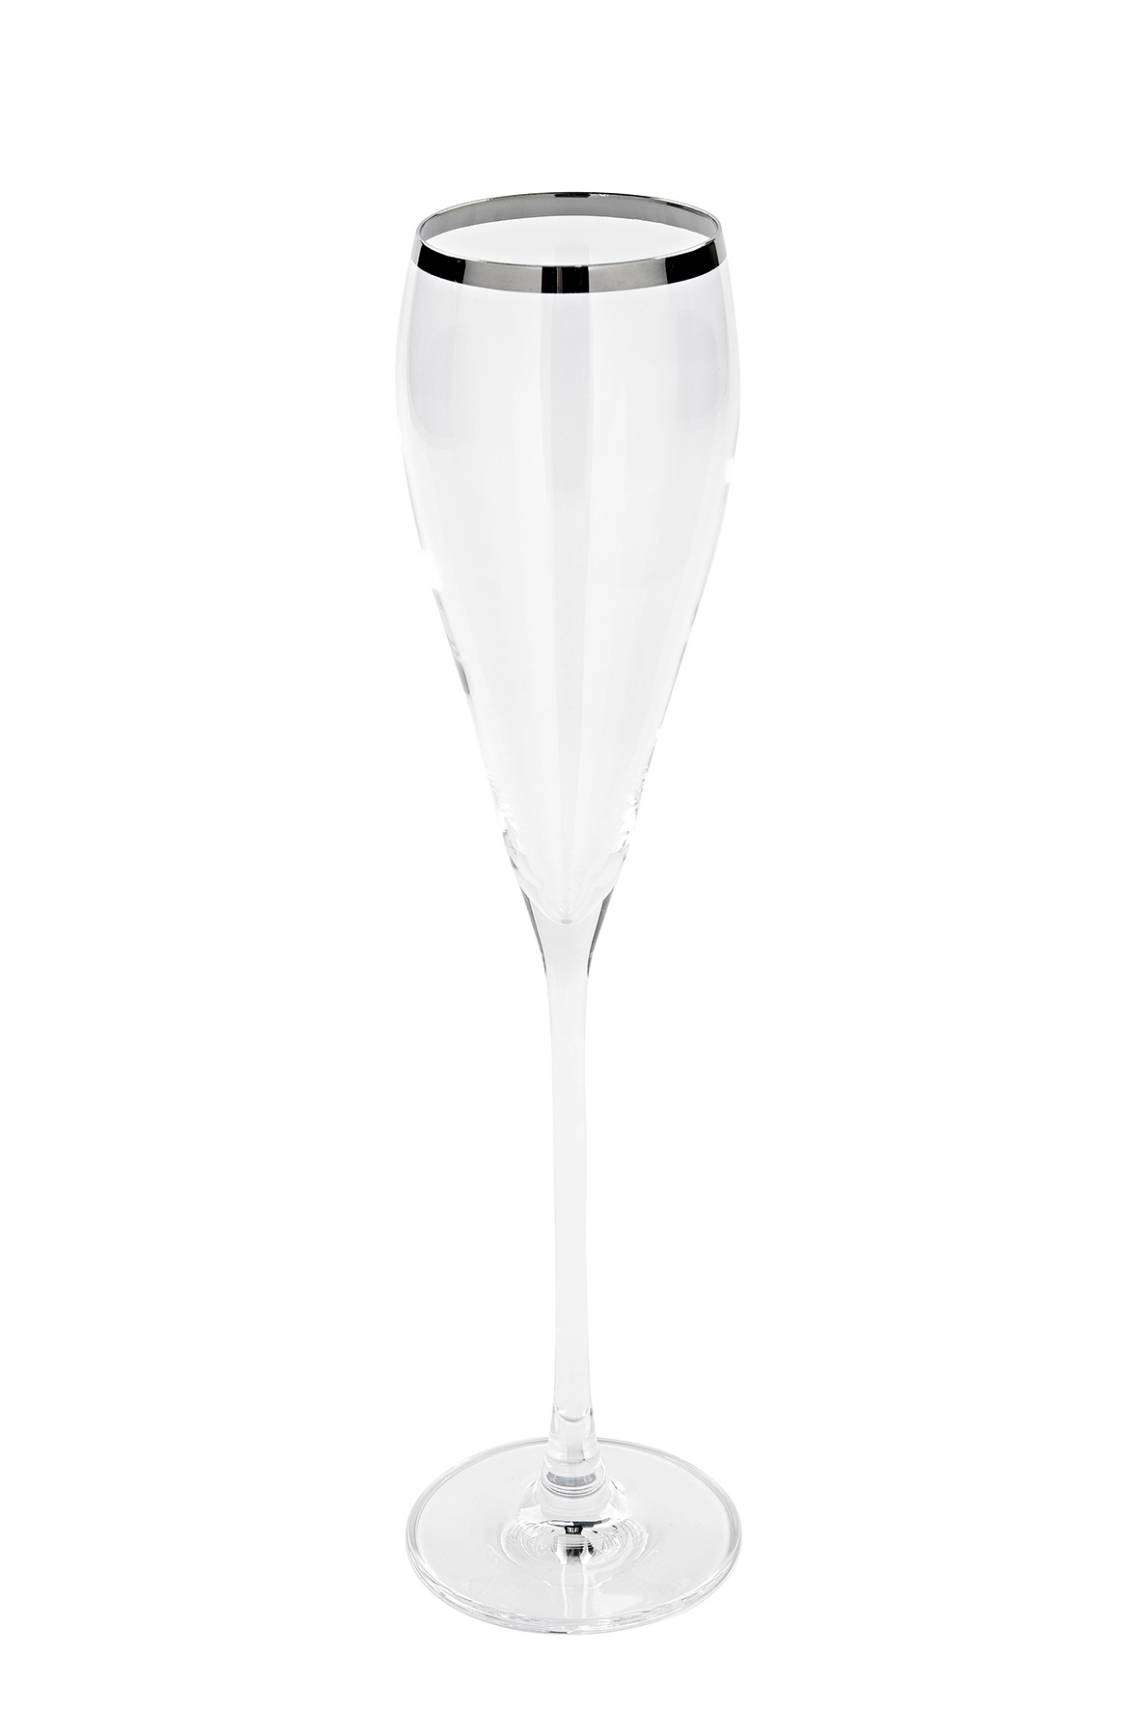 Fink PLATINUM Champagnerglas 110023